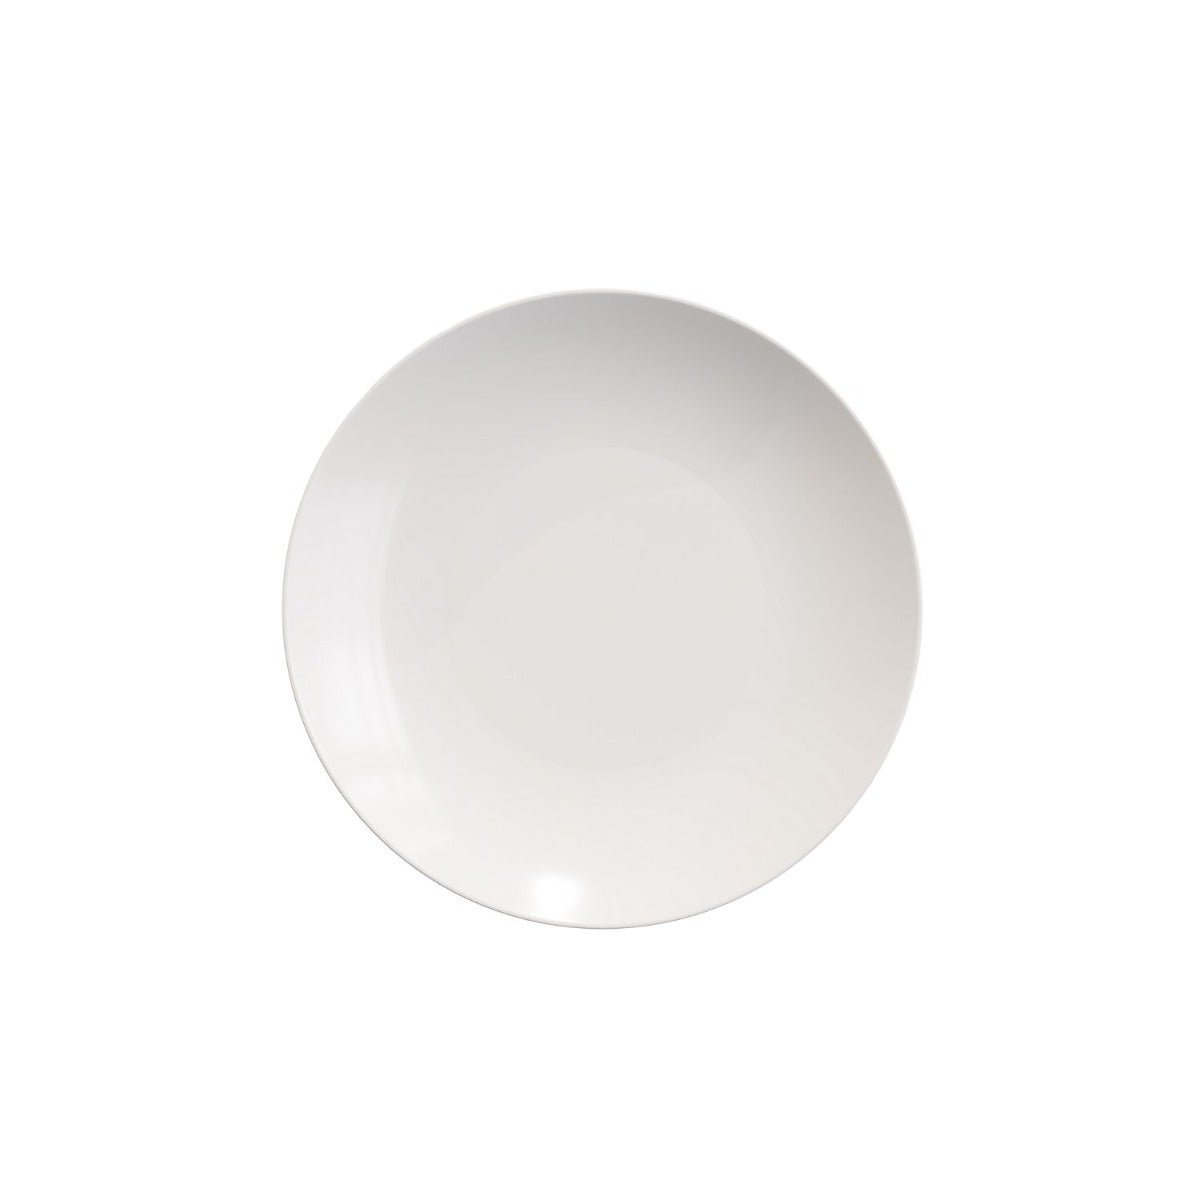 6" Trend White Plastic Plates (120 Count)